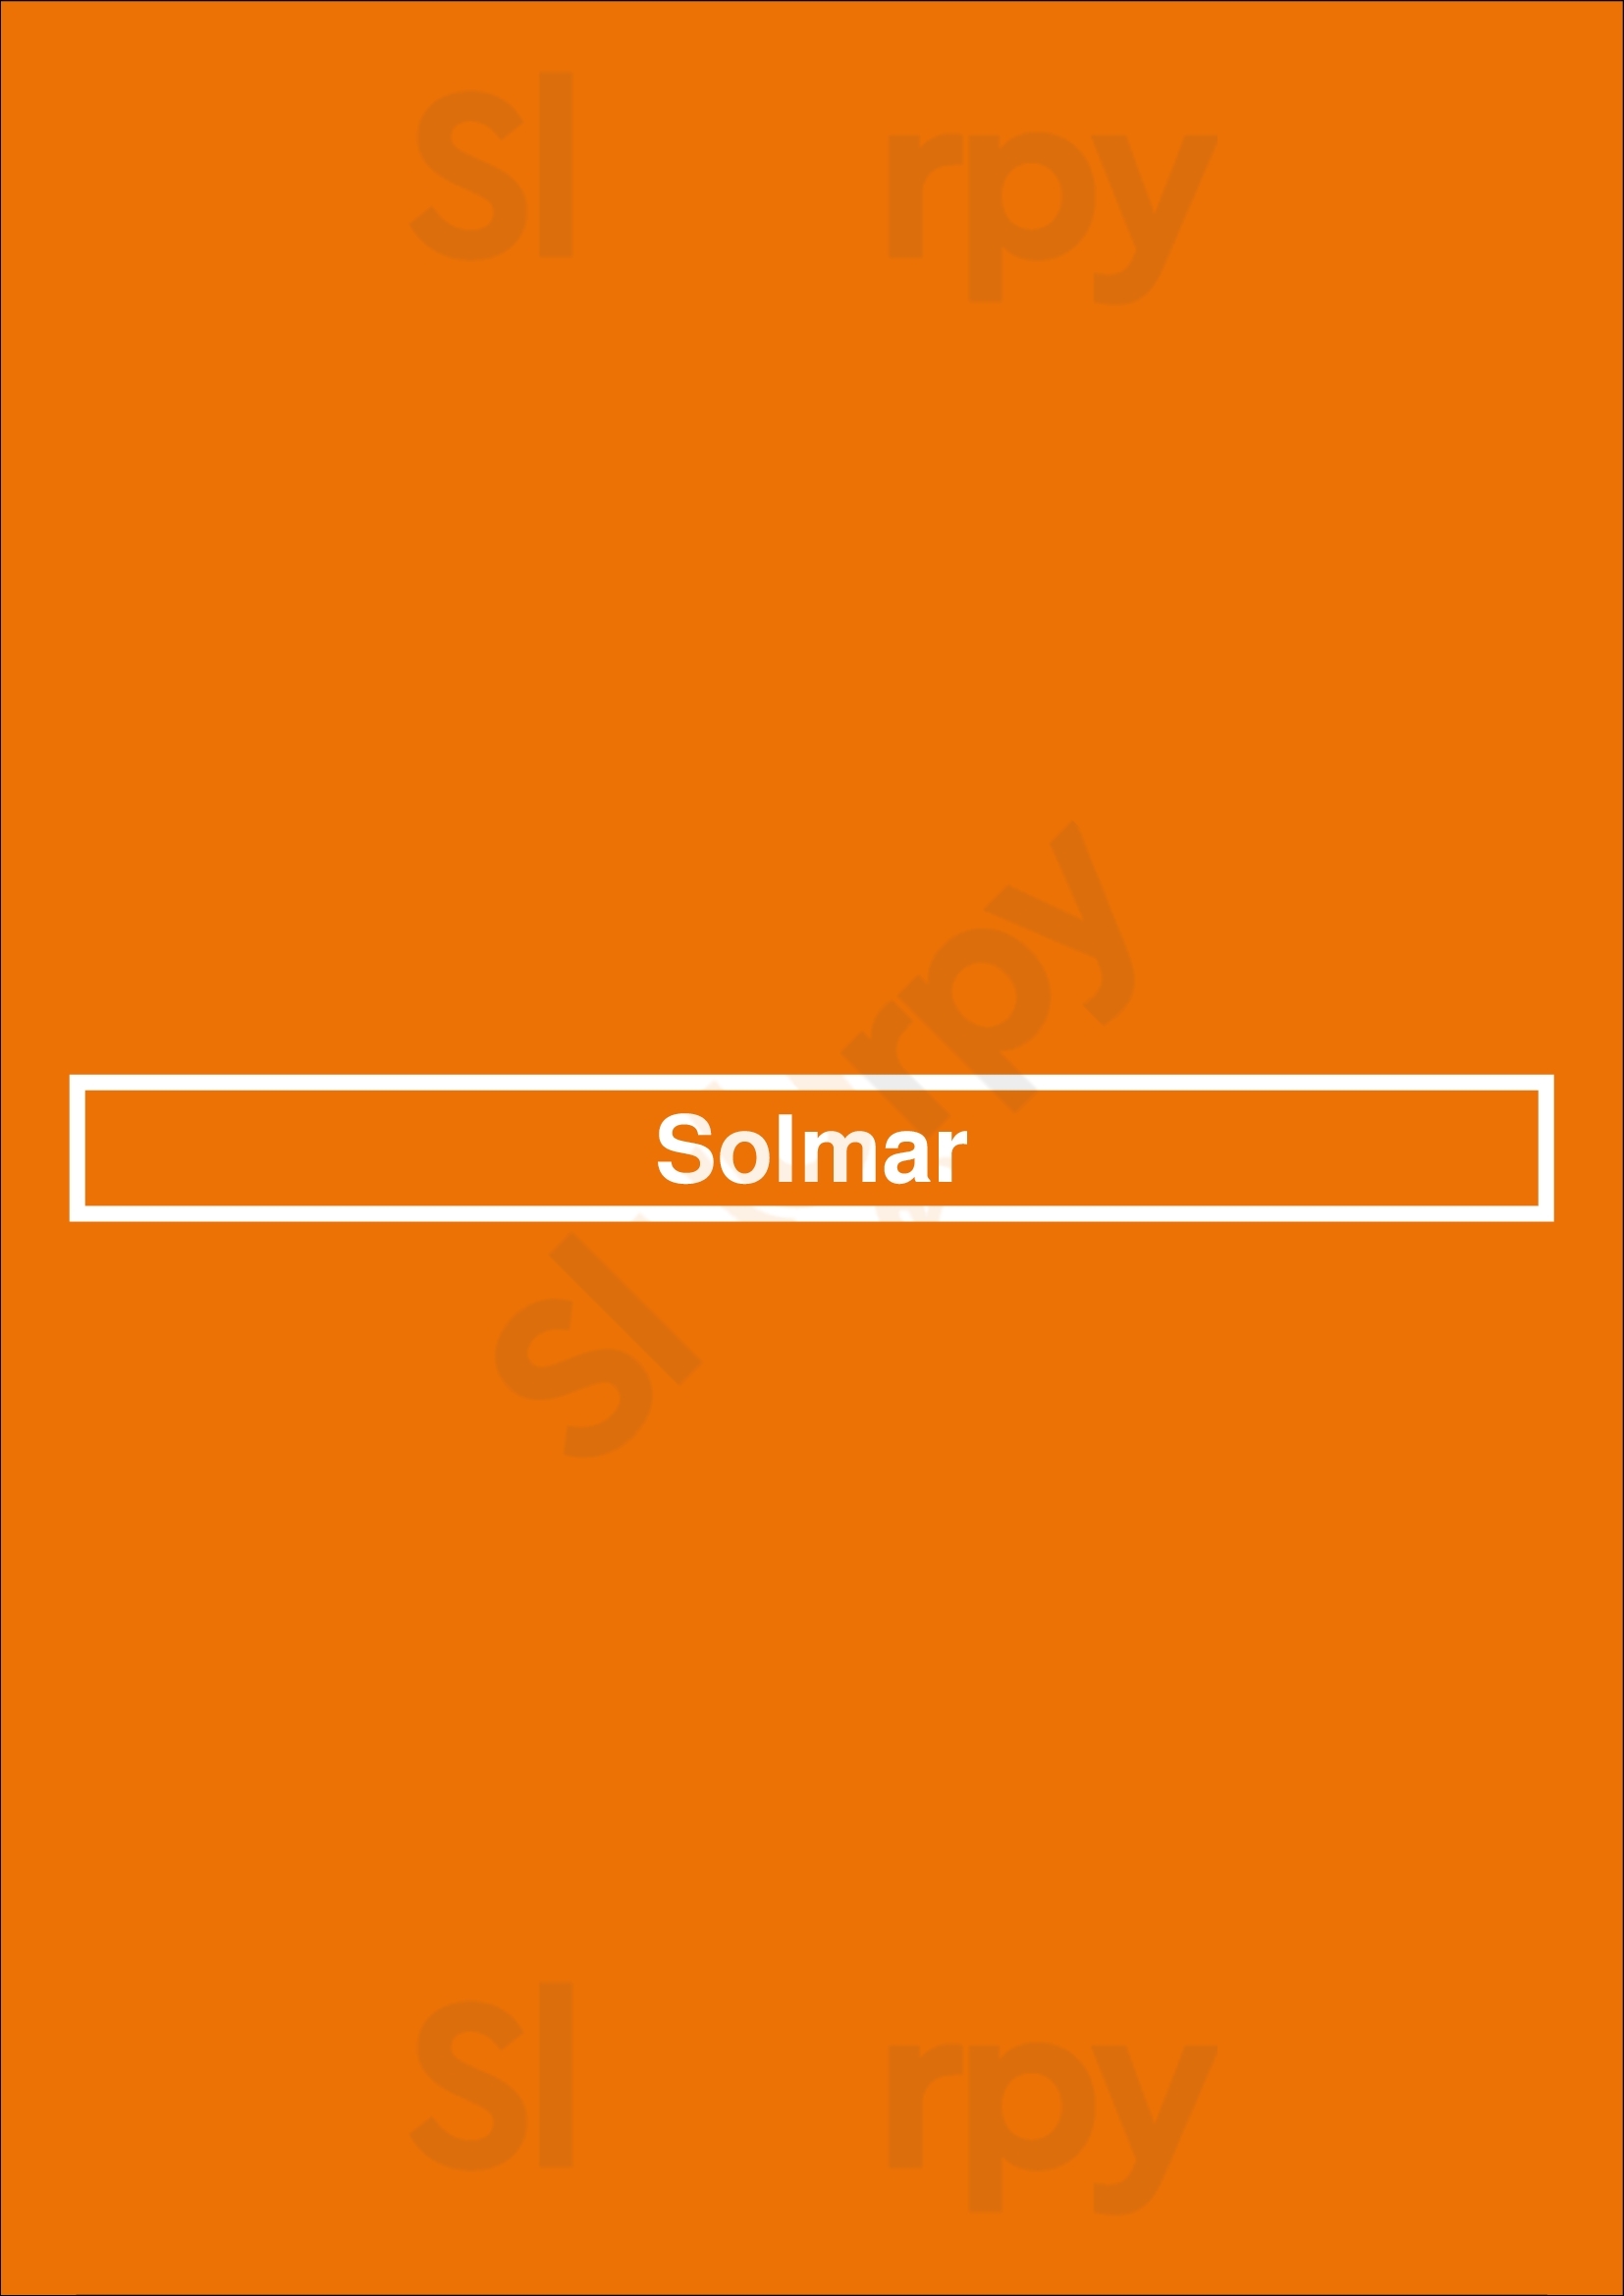 Solmar Montreal Menu - 1